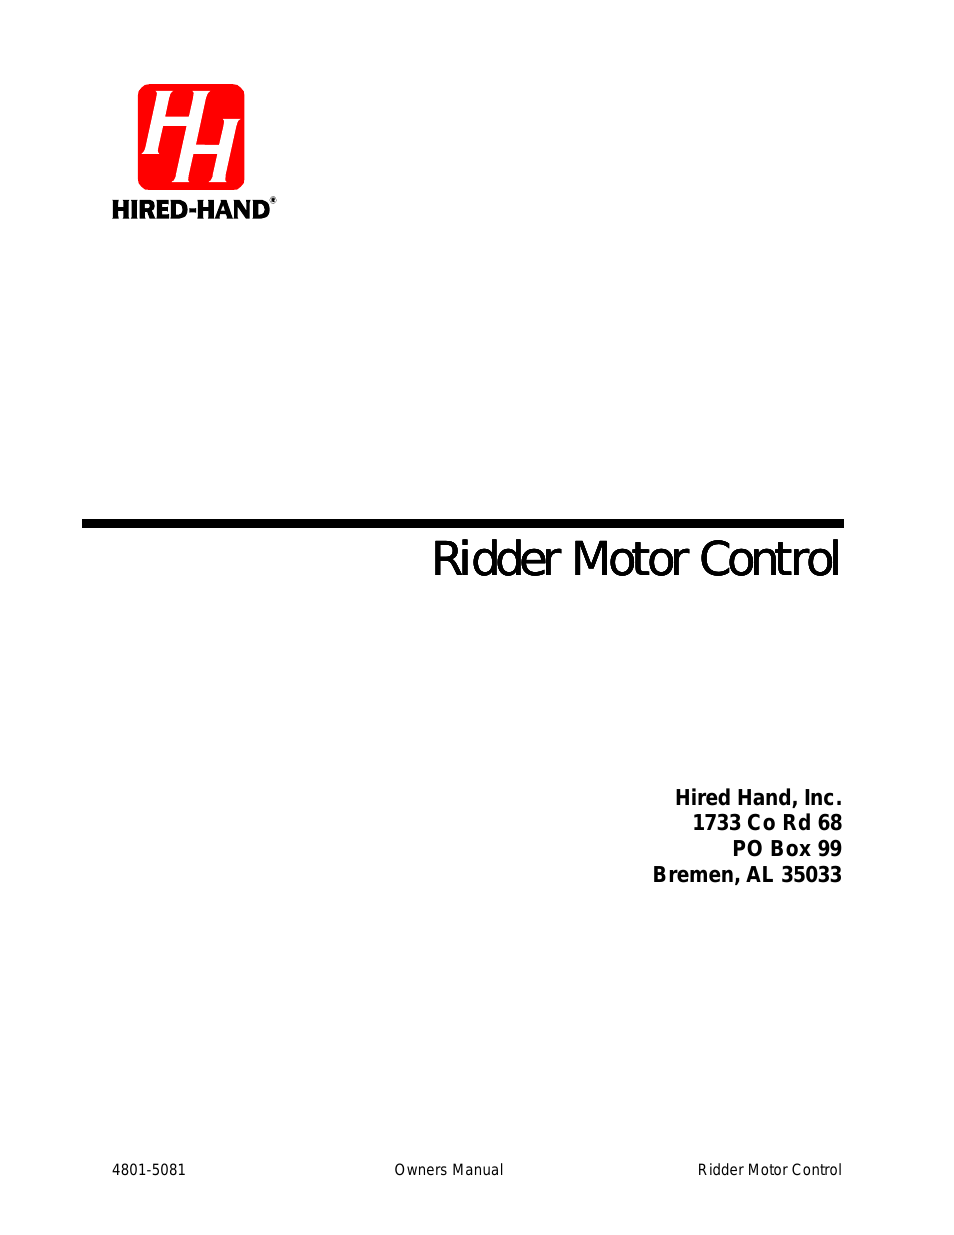 RollSeal Rollup Curtains: Ridder Motor Control